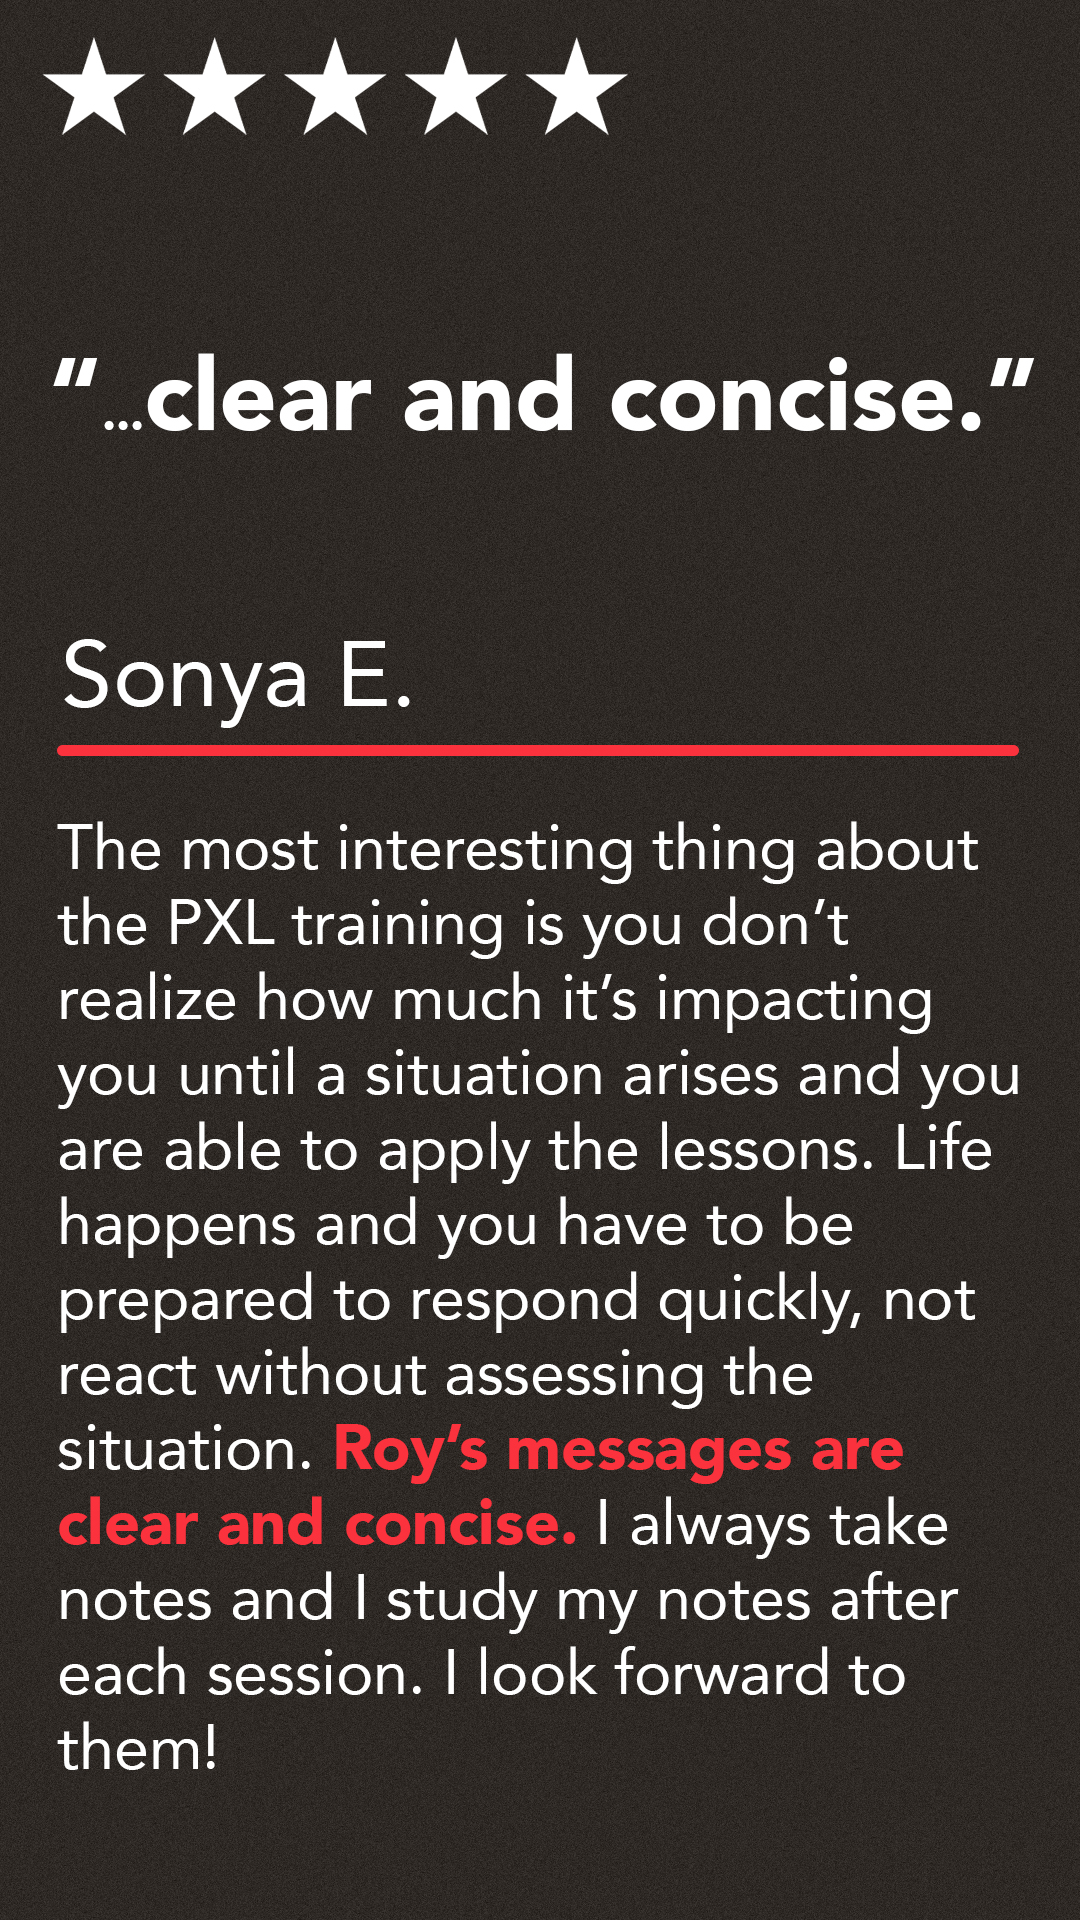 Sonya E